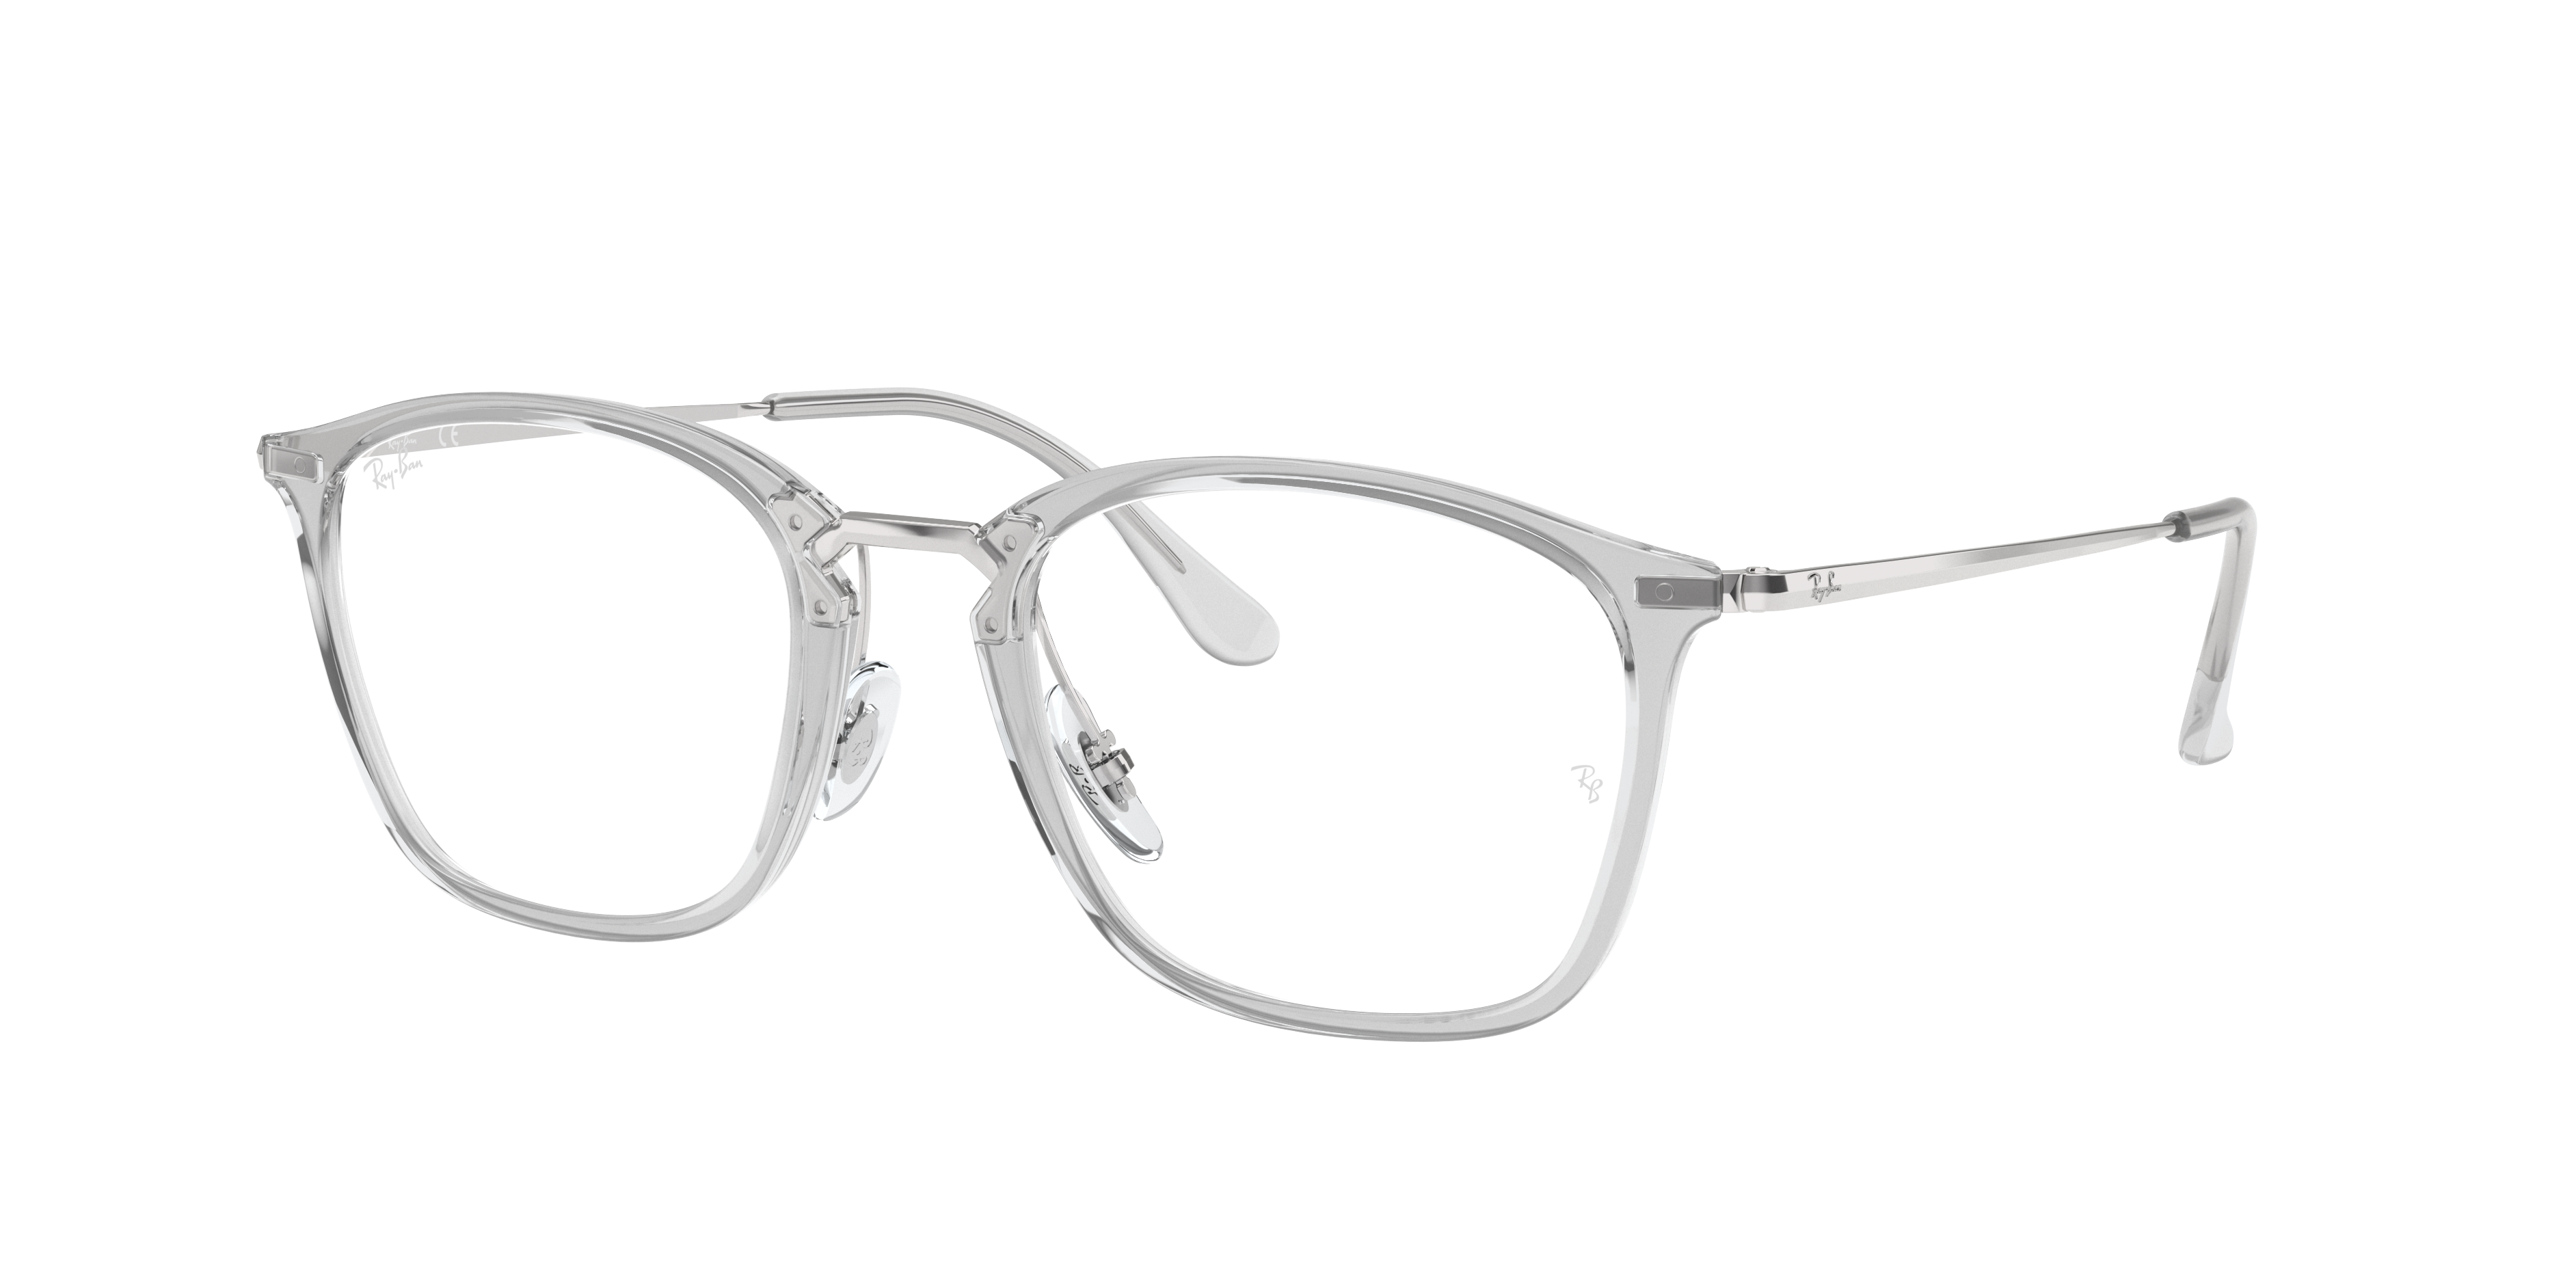 Rb7164 Optics Eyeglasses with Transparent Frame | Ray-Ban®